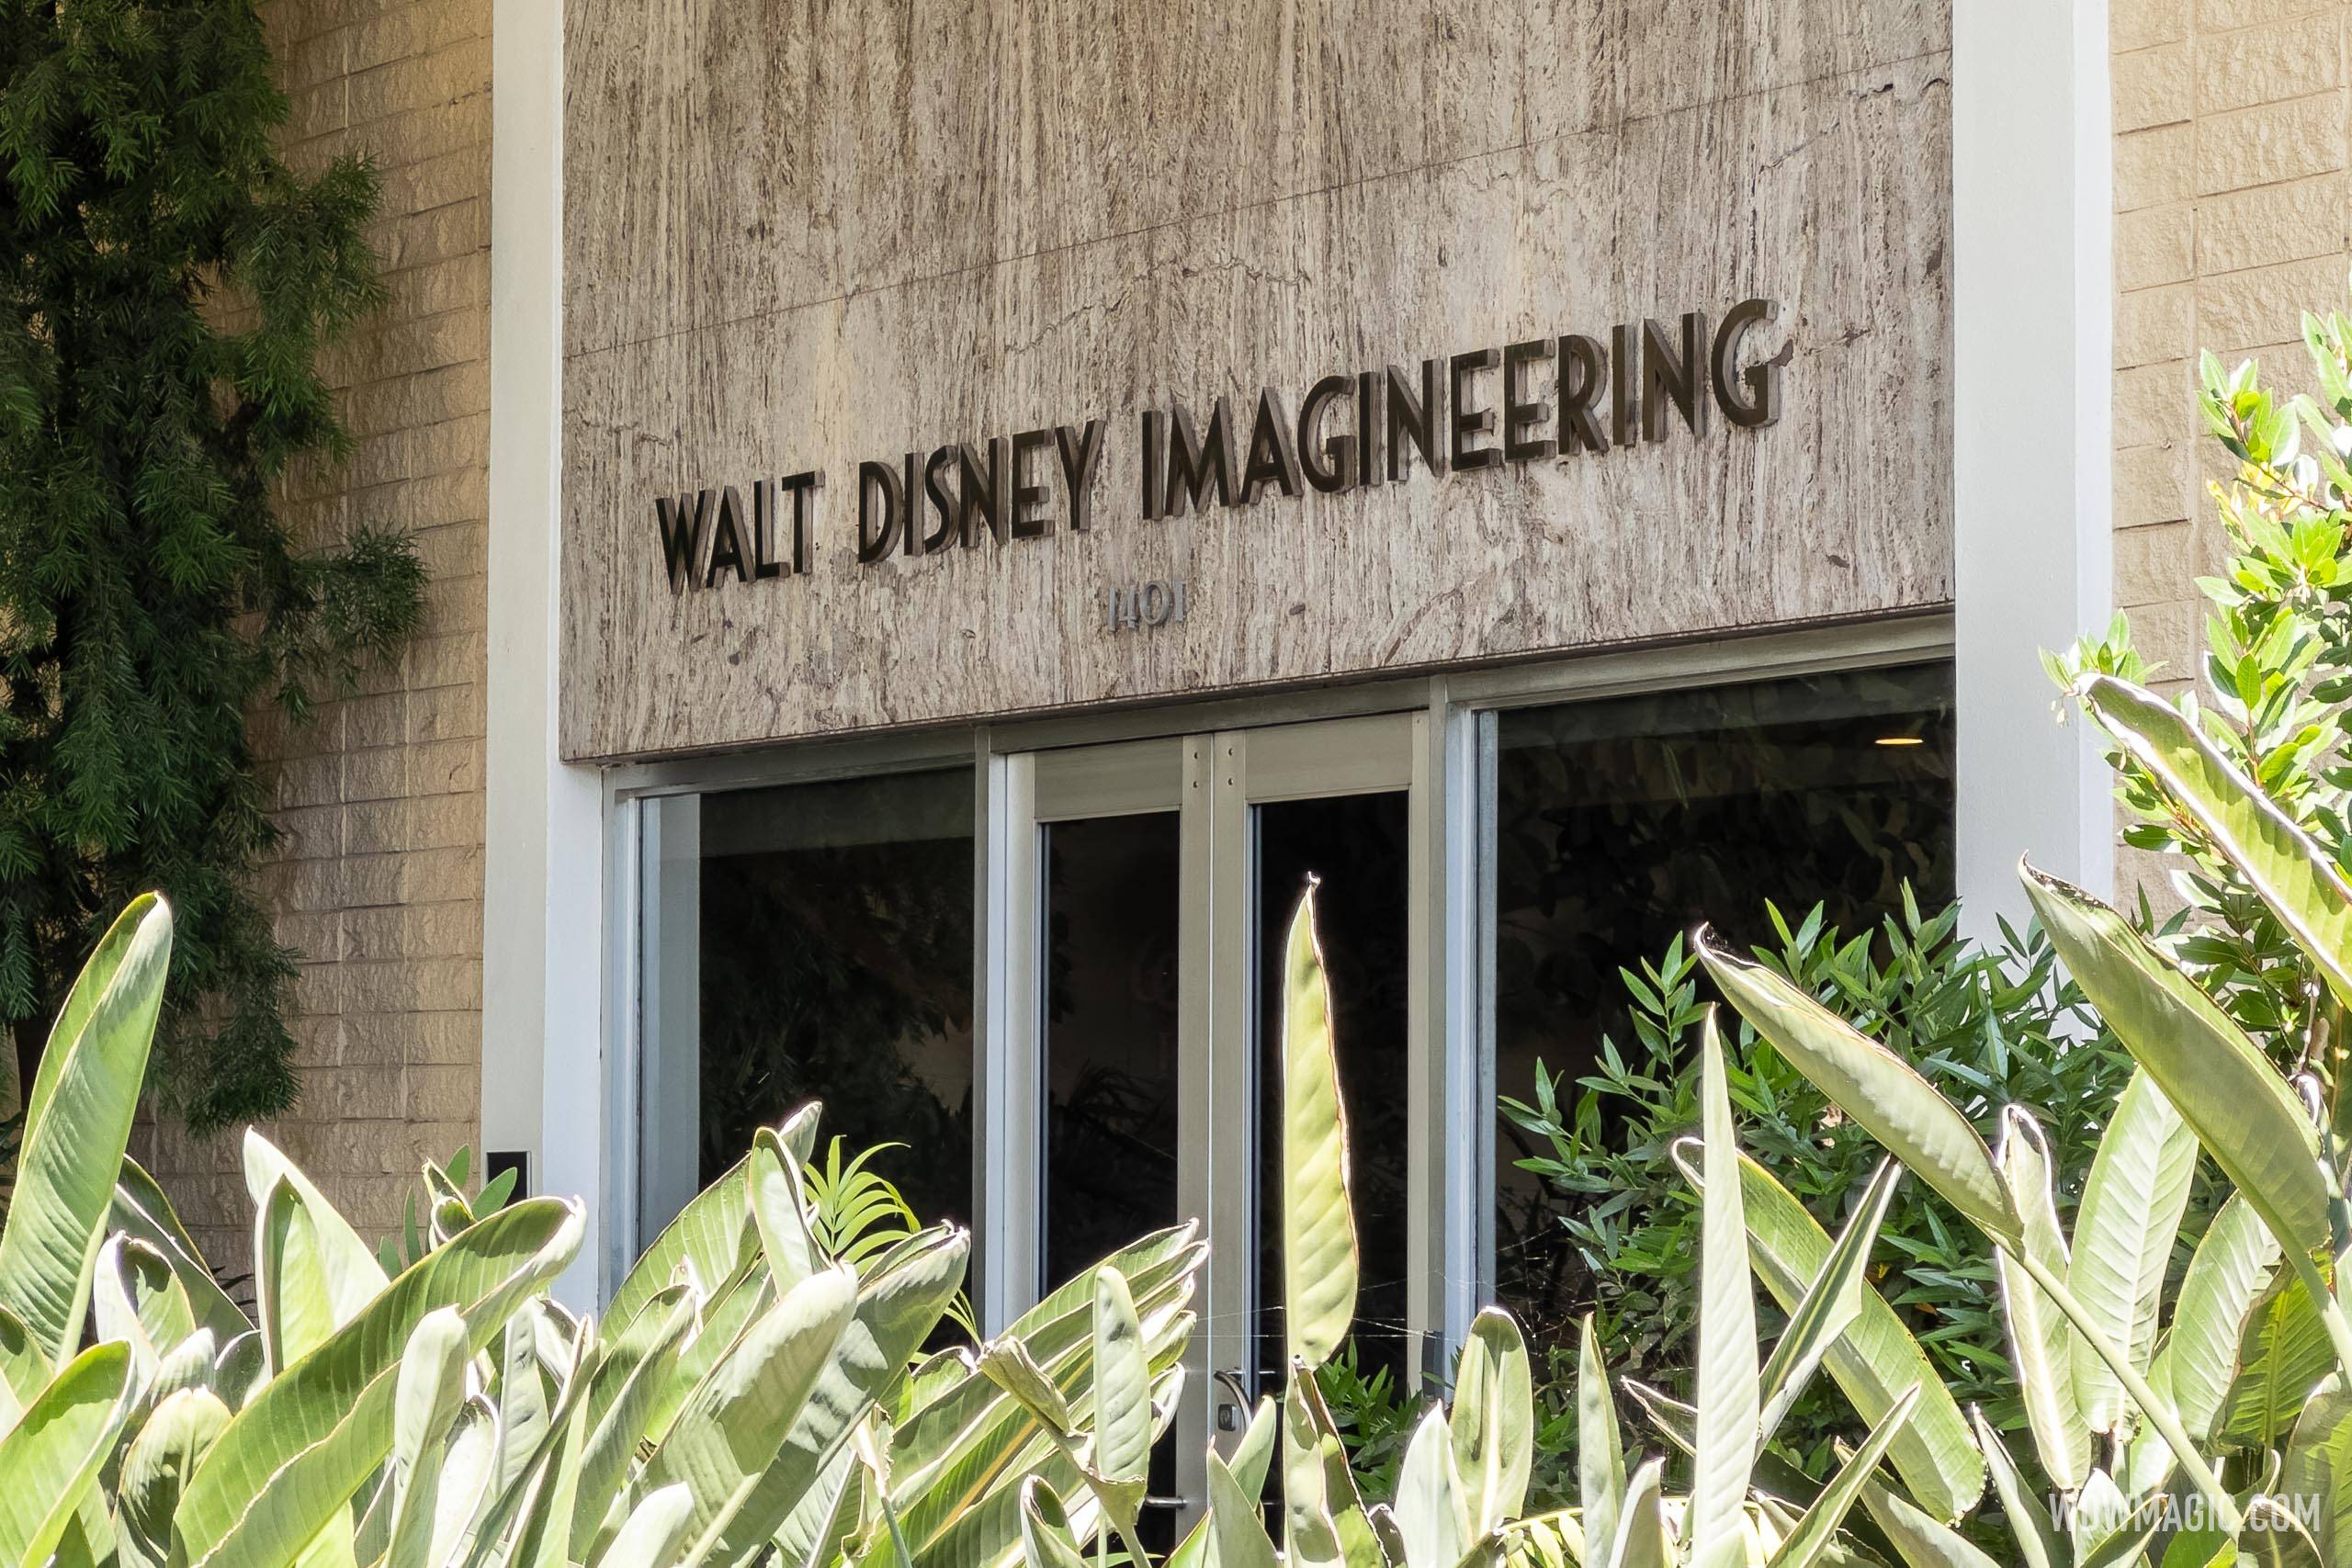 Walt Disney Imagineering headquarters